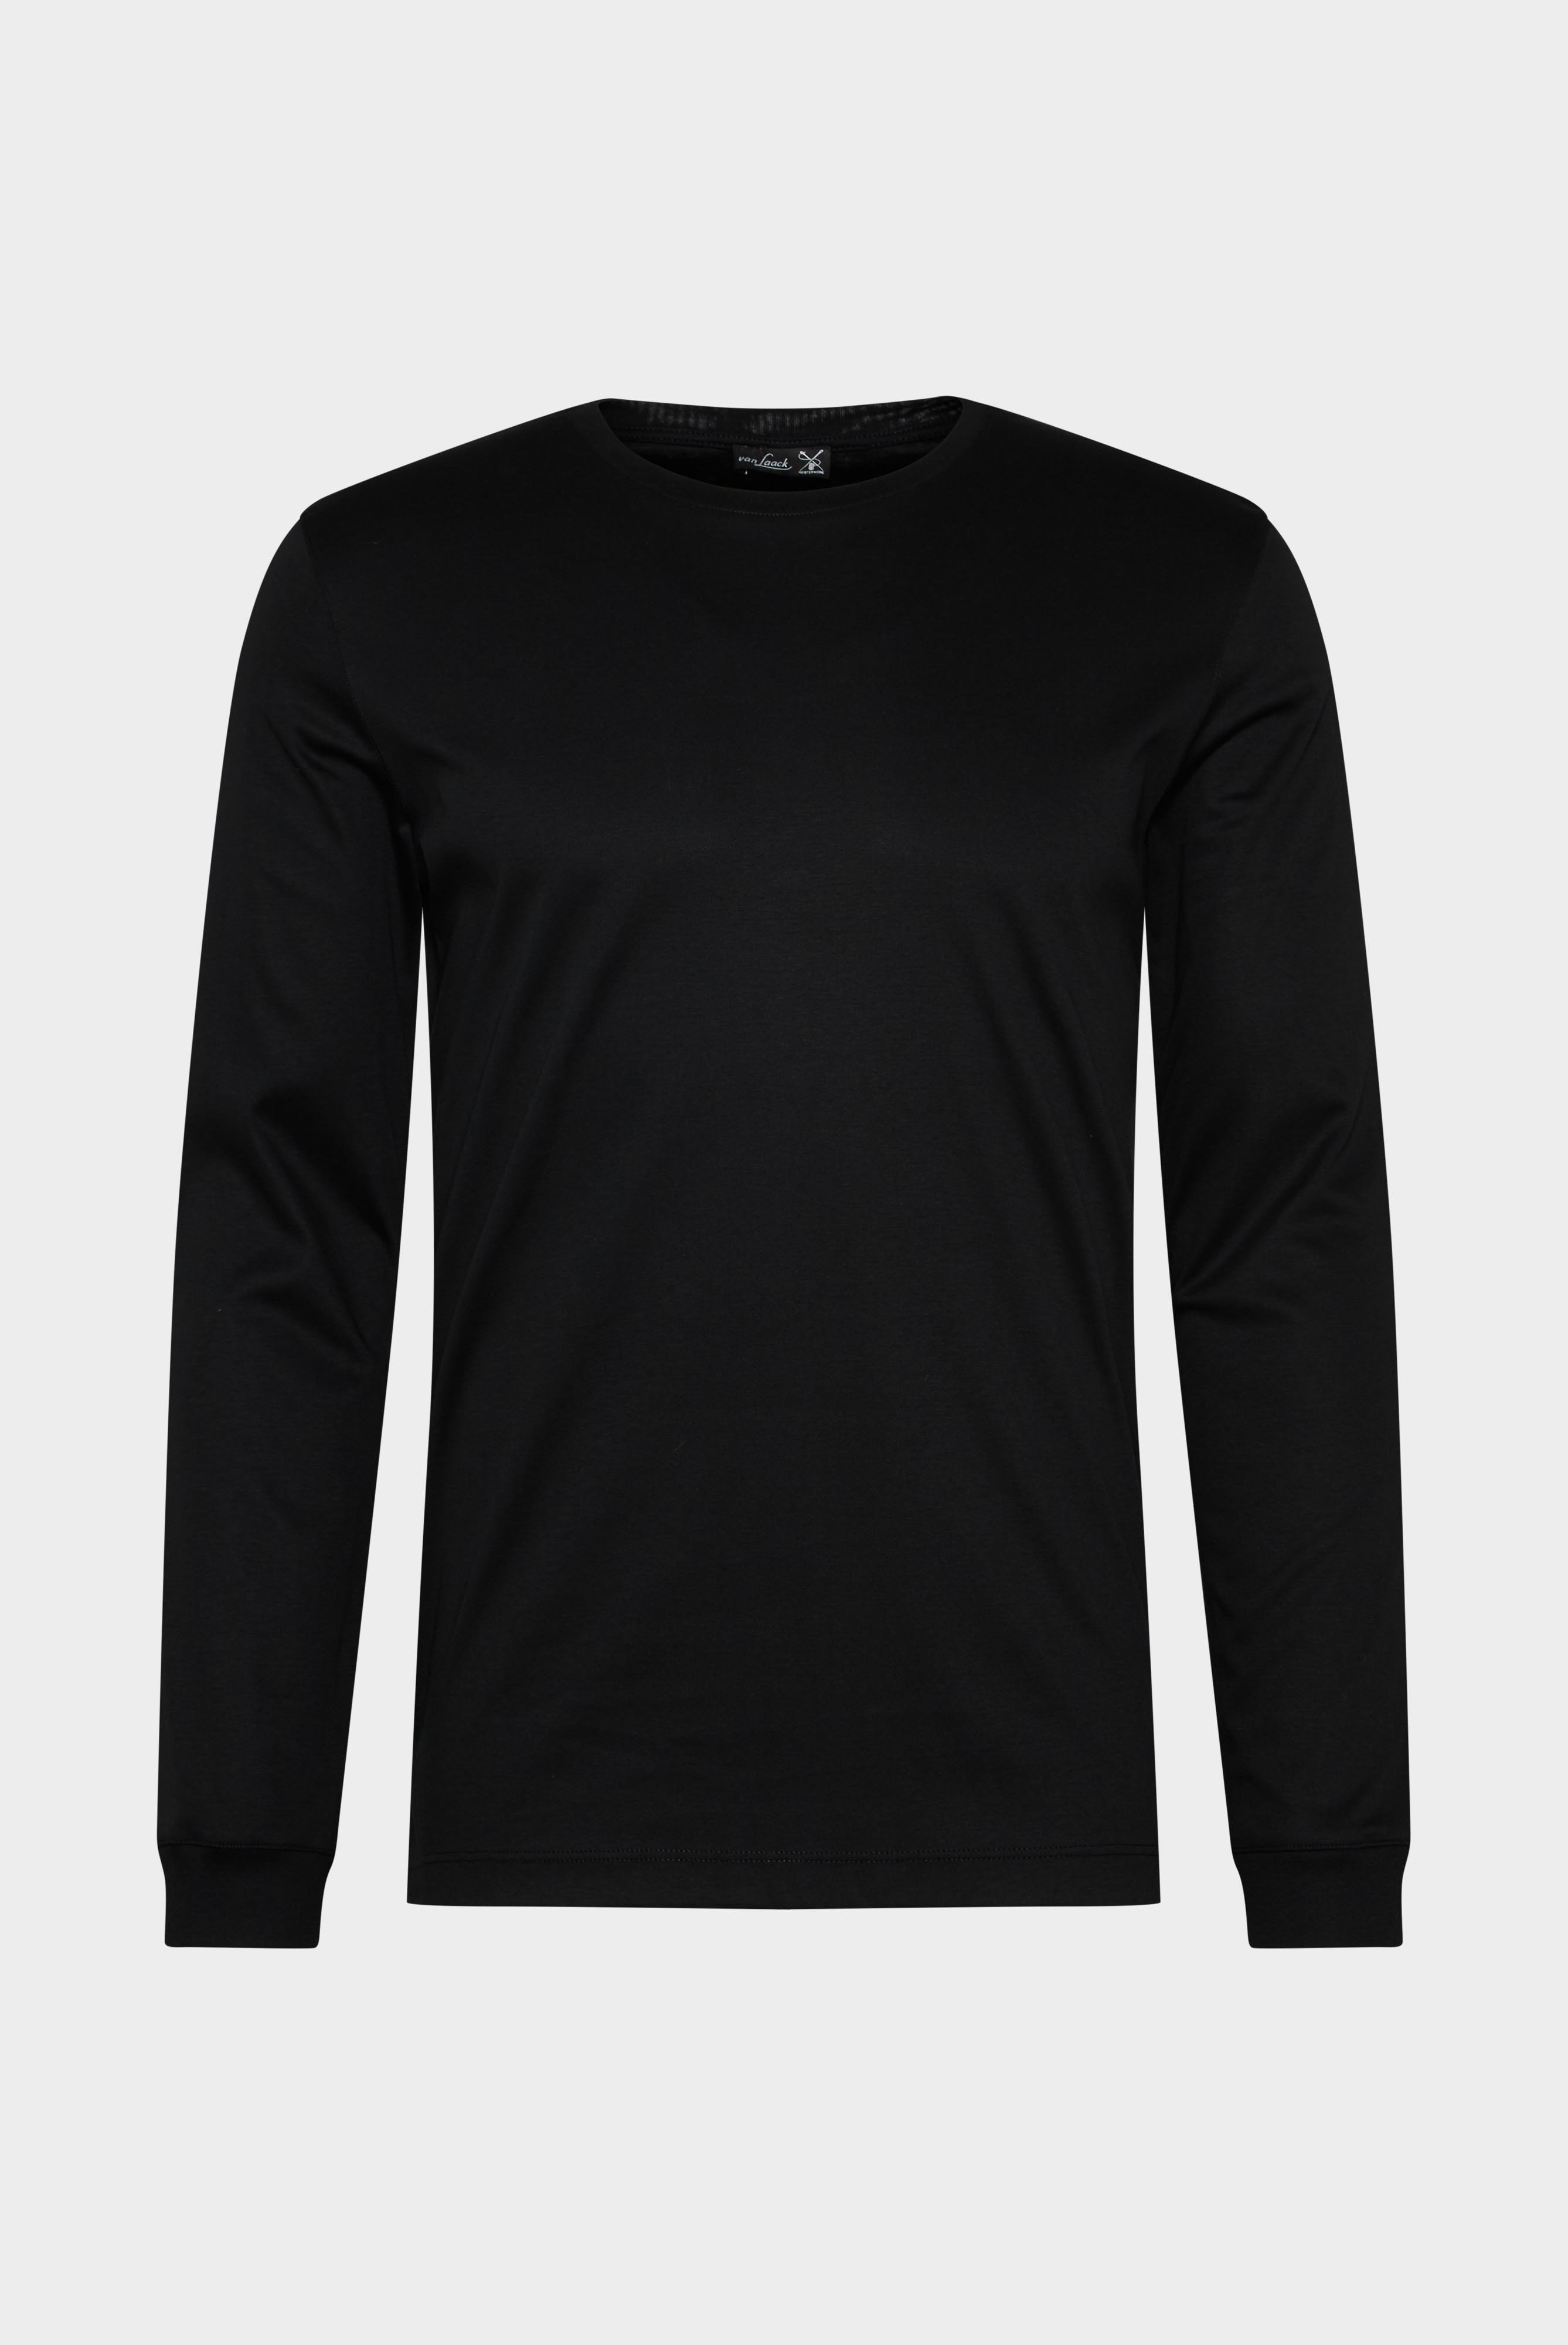 T-Shirts+Longsleeve Swiss Cotton Jersey Crew Neck T-Shirt+20.1718.UX.180031.099.S